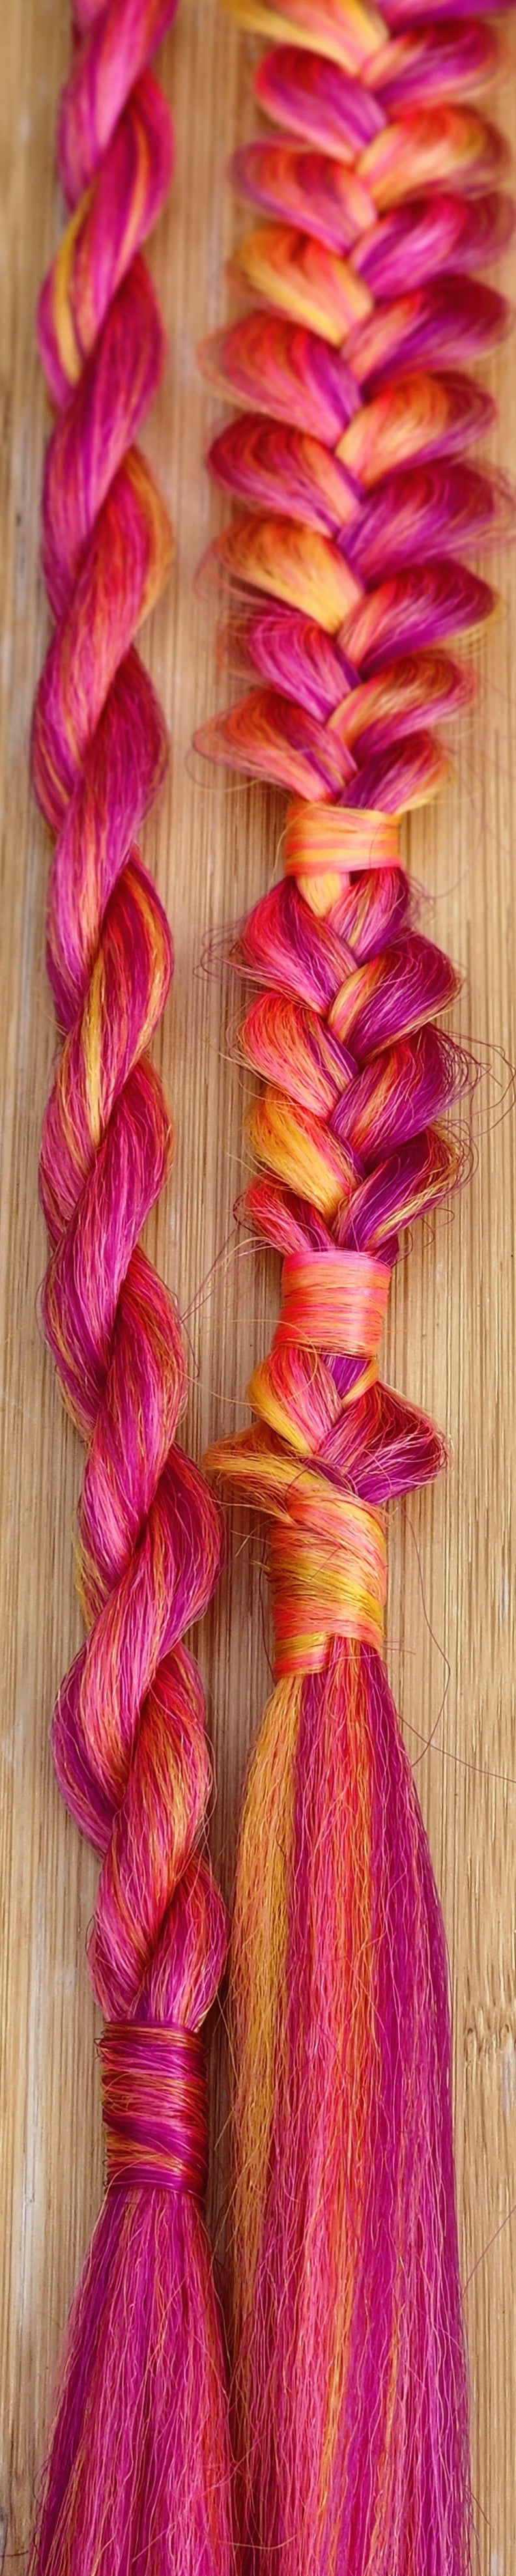 Pink and Yellow Single Braid and Twist on Nylon Hairband